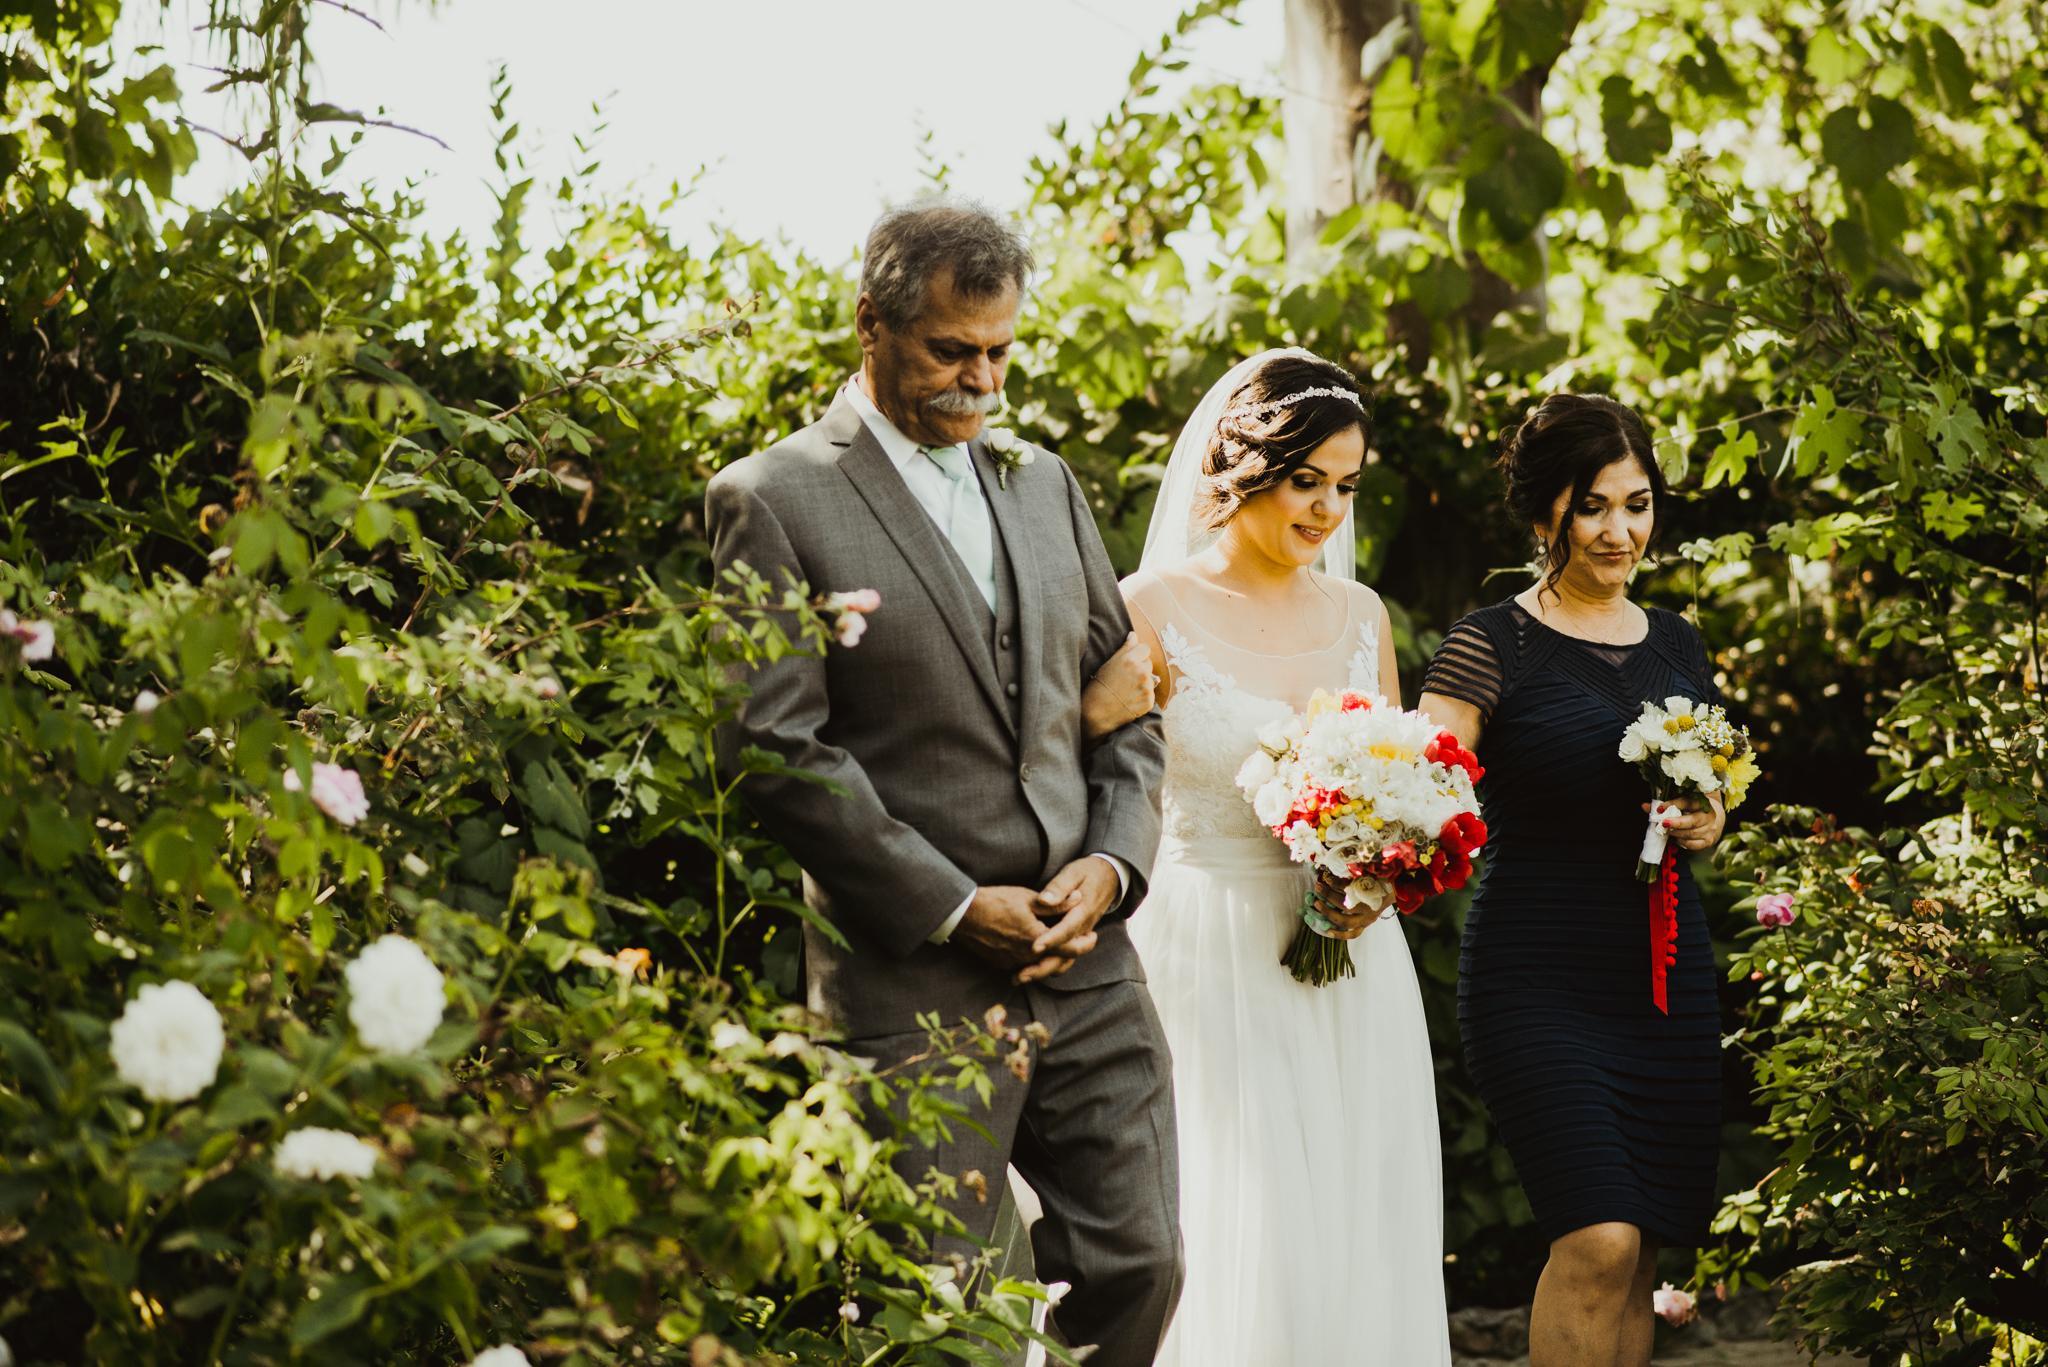 ©Isaiah + Taylor Photography - Brendan + Stefana, Quail Haven Farm Wedding, Vista-51.jpg